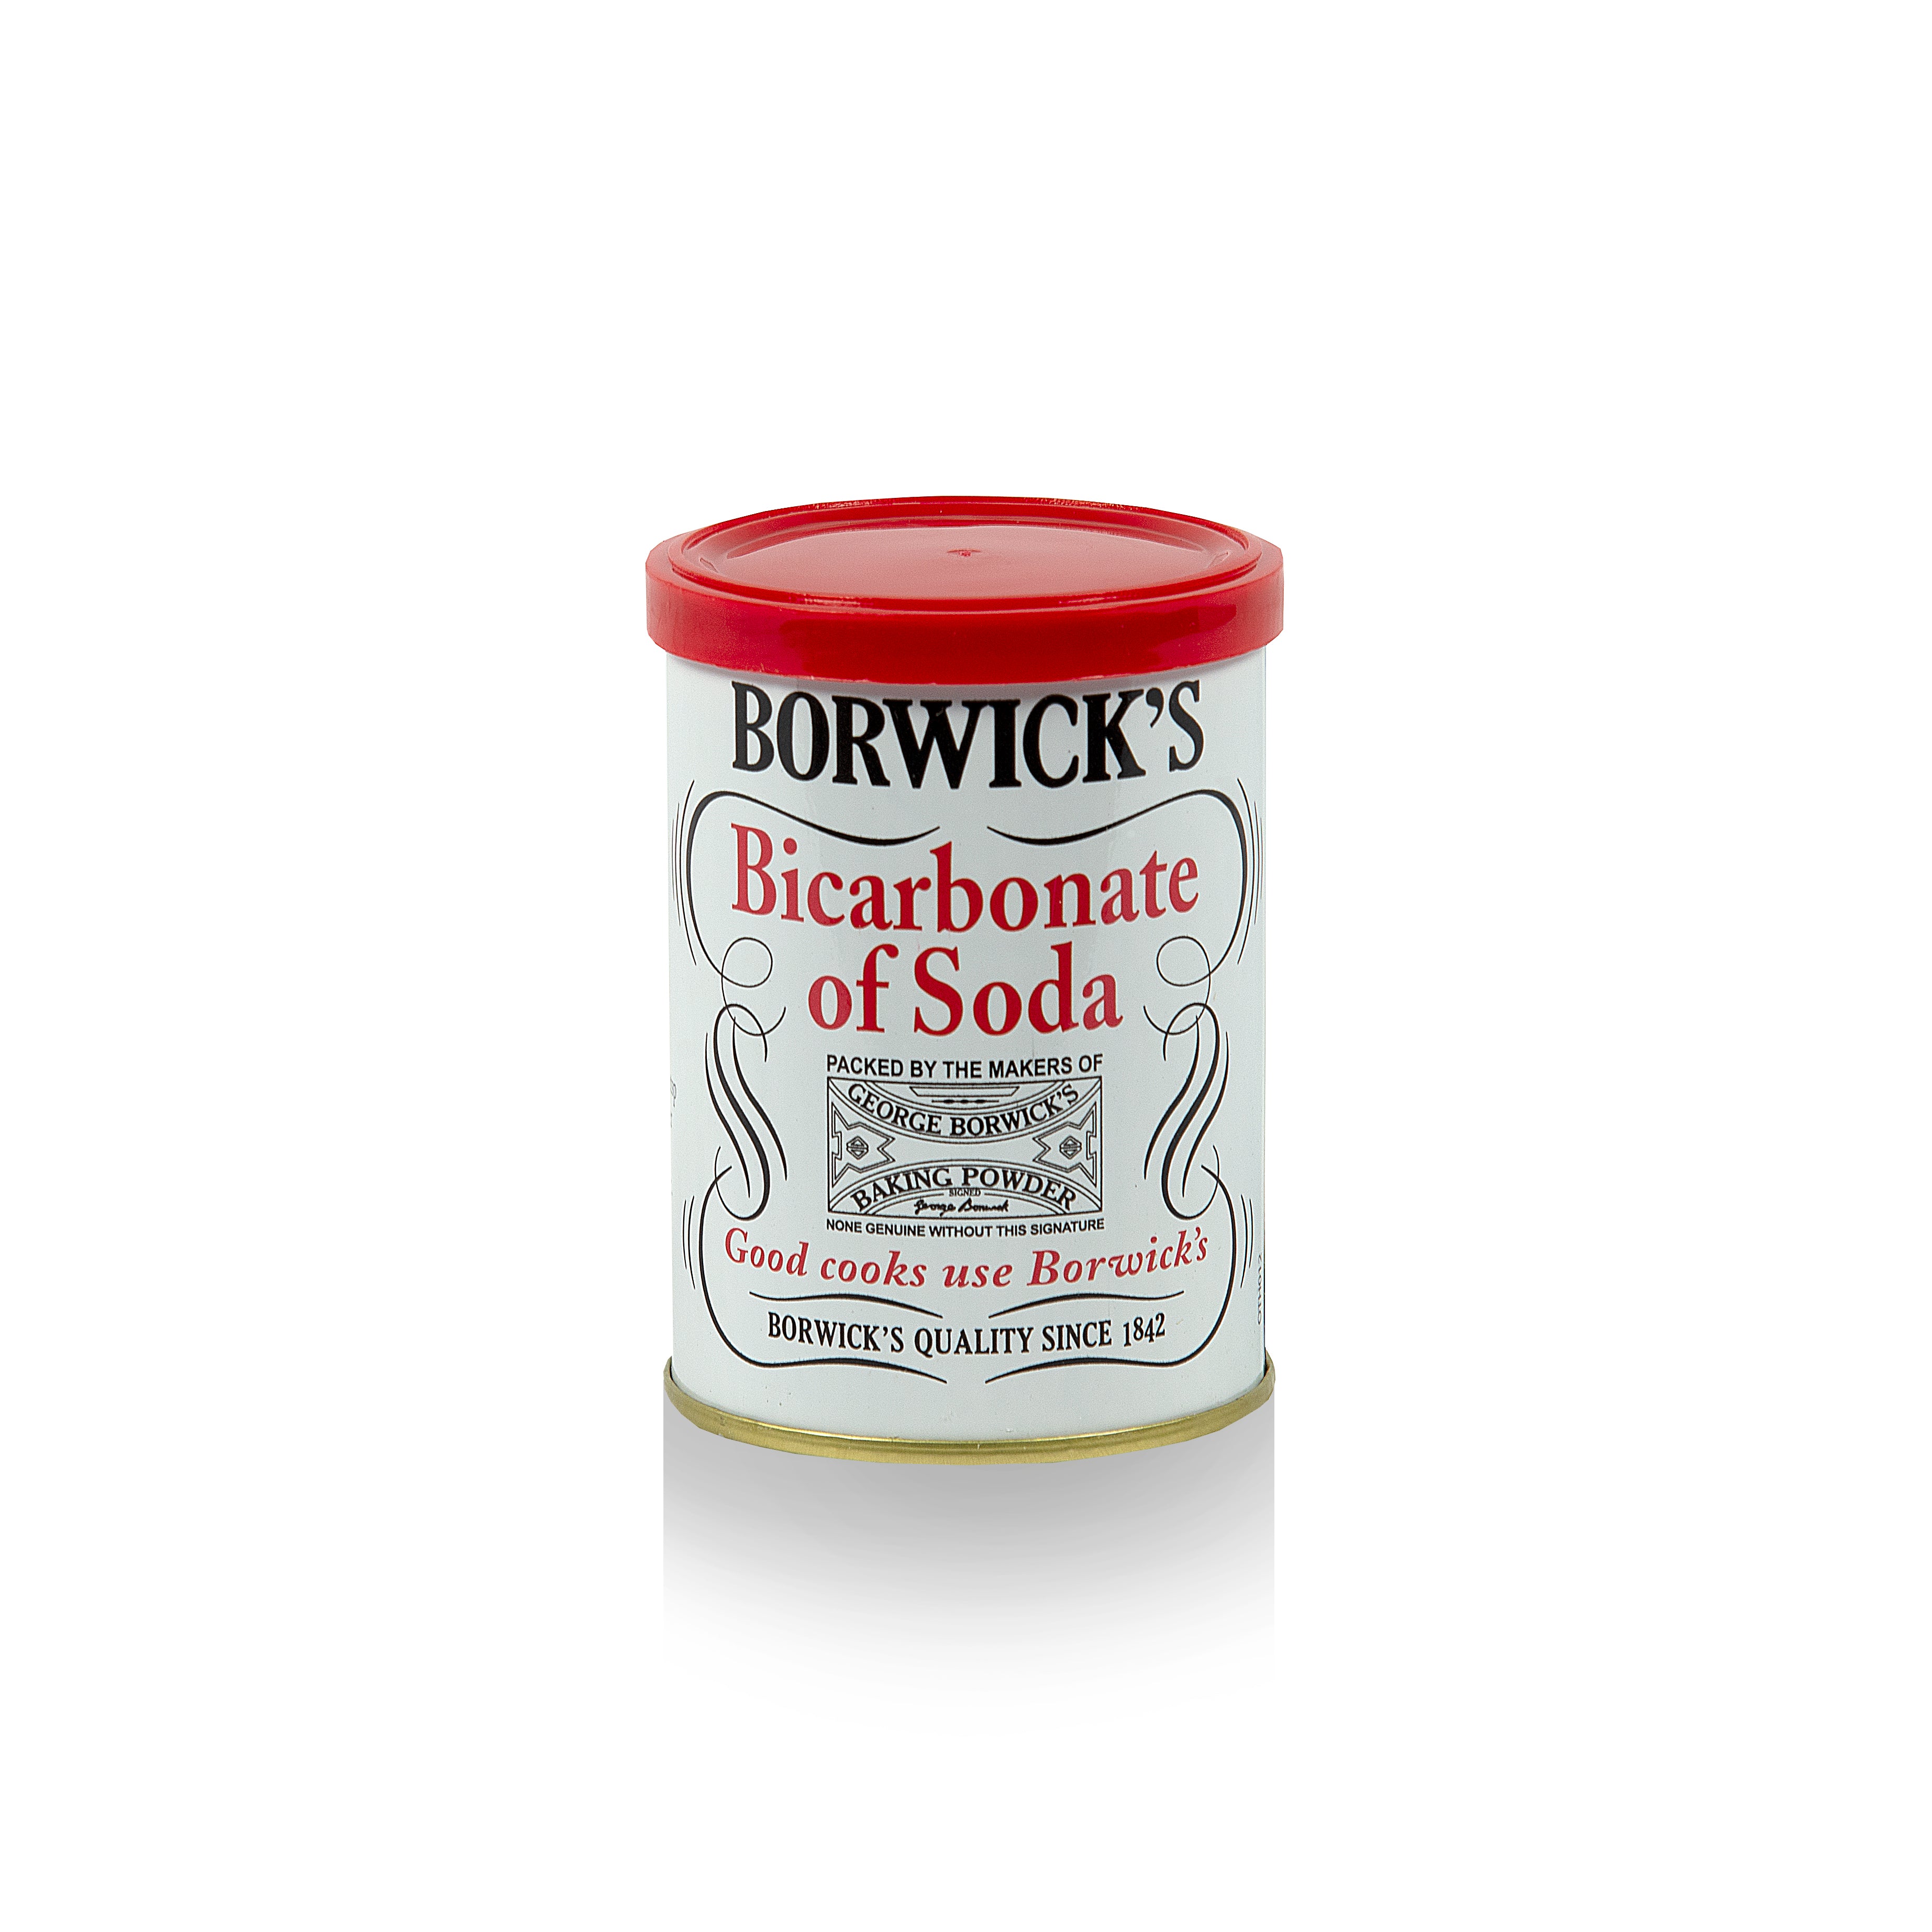 Borwick's Bicarbonate of Soda 100g - pack of 12